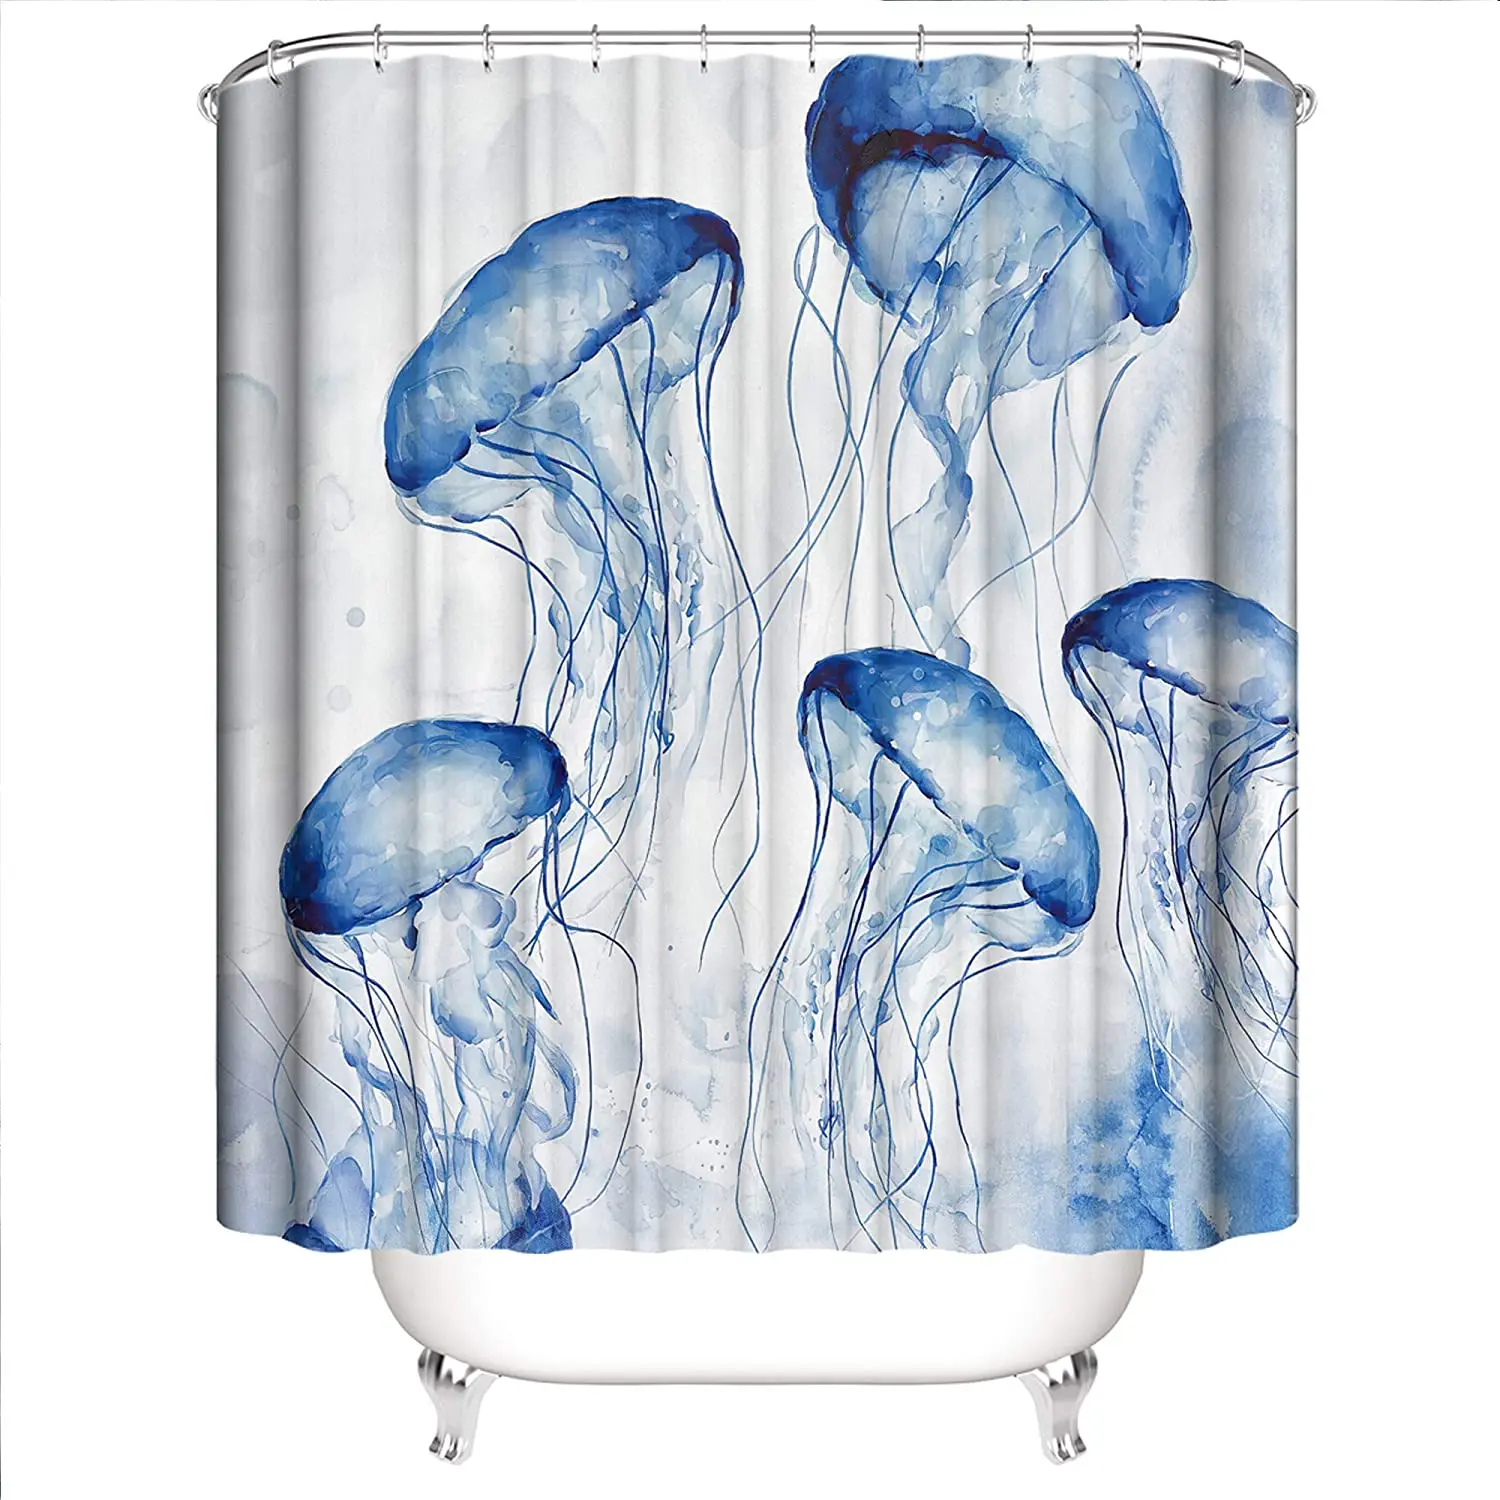 

Jellyfish Shower Curtain Watercolor Exotic Sea Ocean Creature Aquatic Animals Print Cloth Fabric Bathroom Decor Set with Hooks